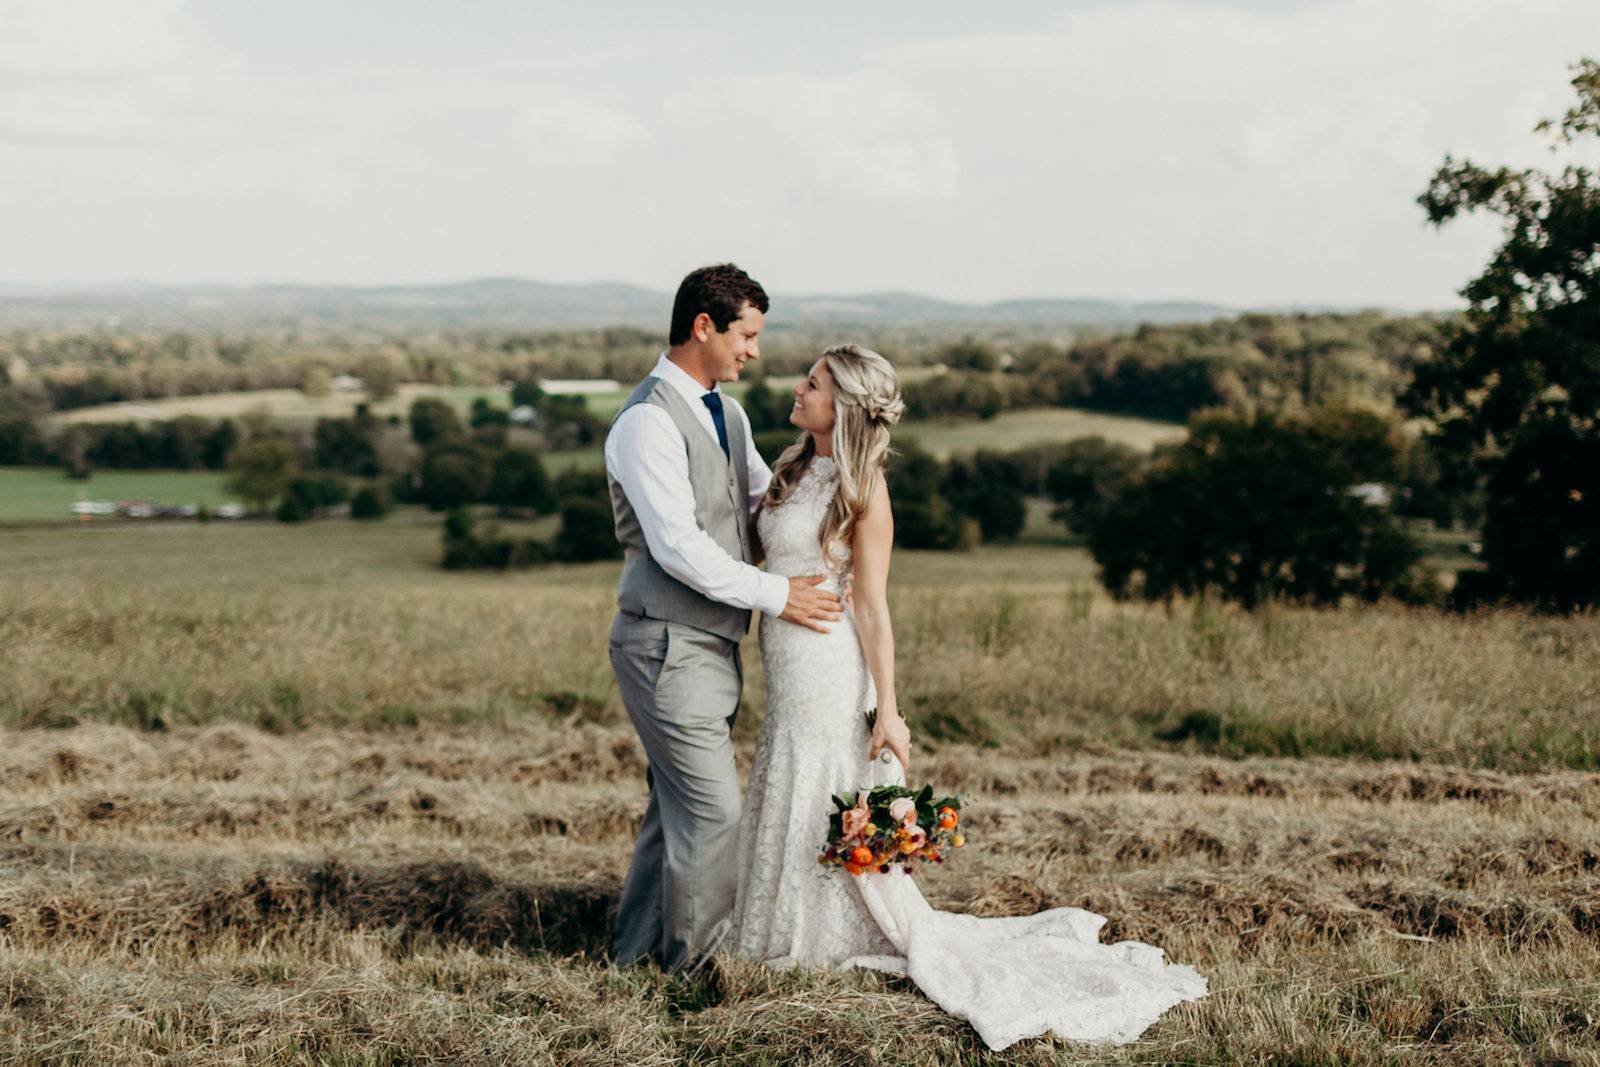 Chloe + Tyler’s Wedding at Cedar Springs Farm |  Nashville Real Wedding